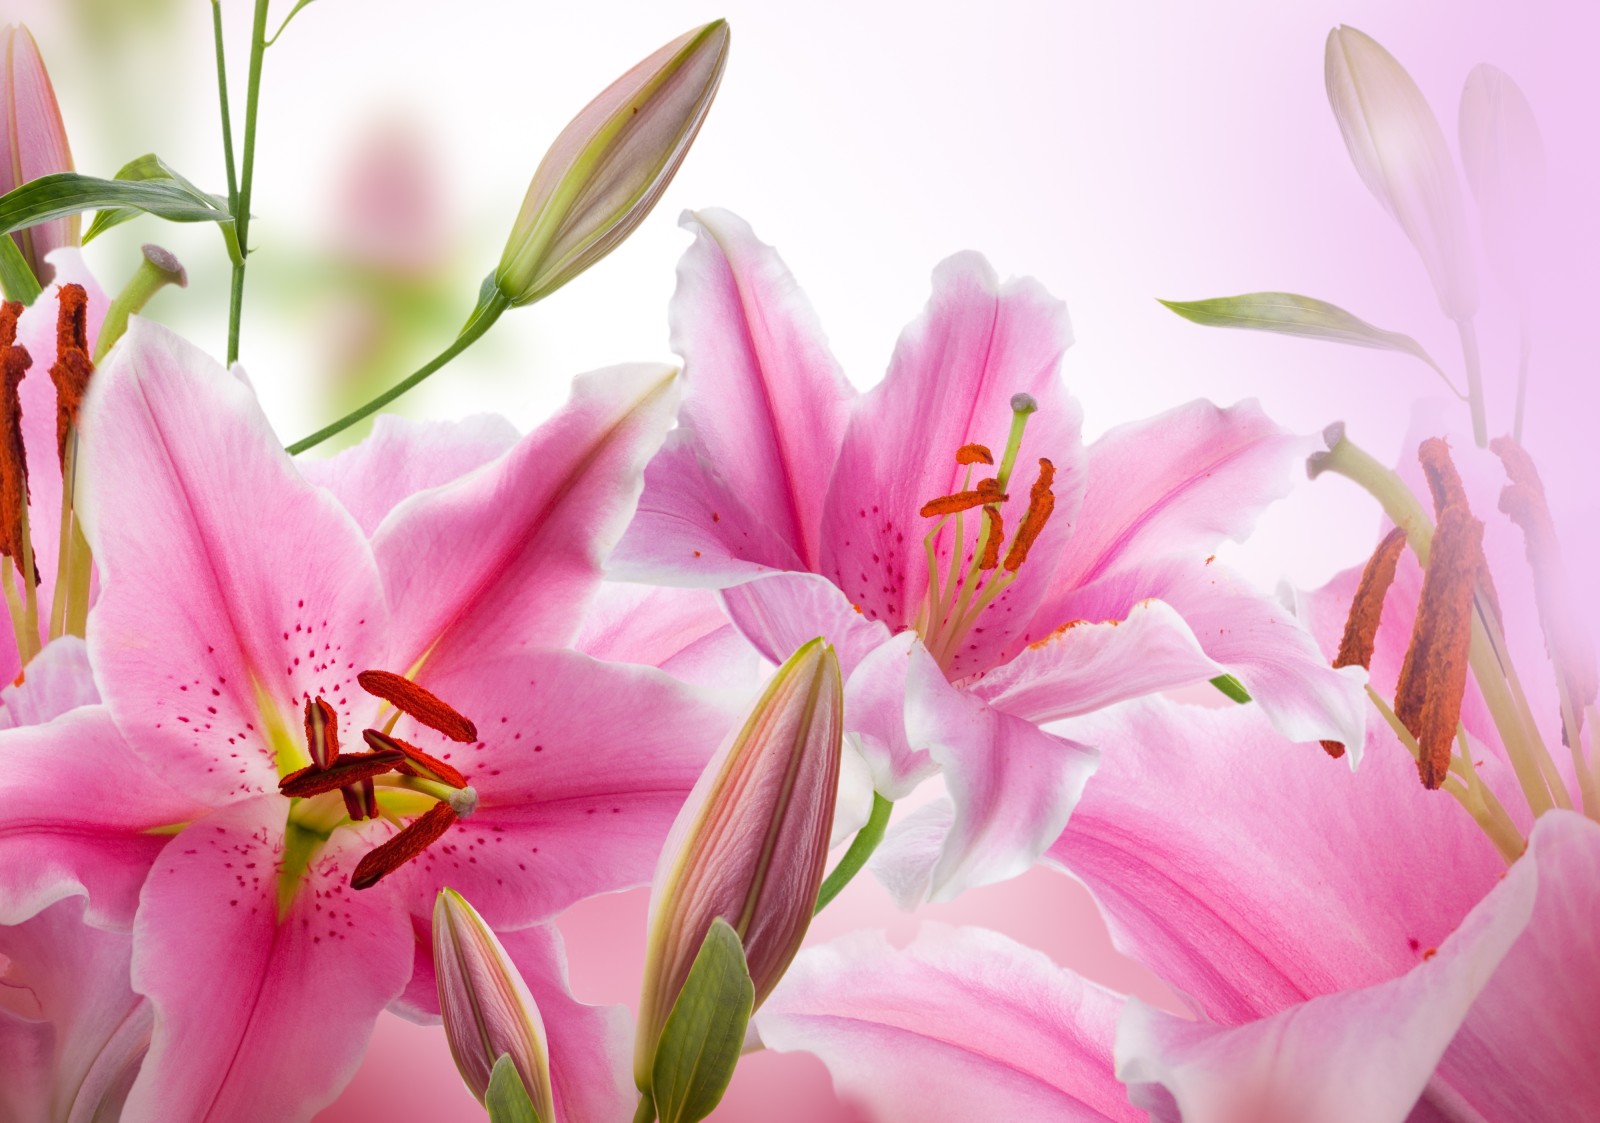 Daun-daun, kelopak, tunas, berbunga, bunga, Pink Lily